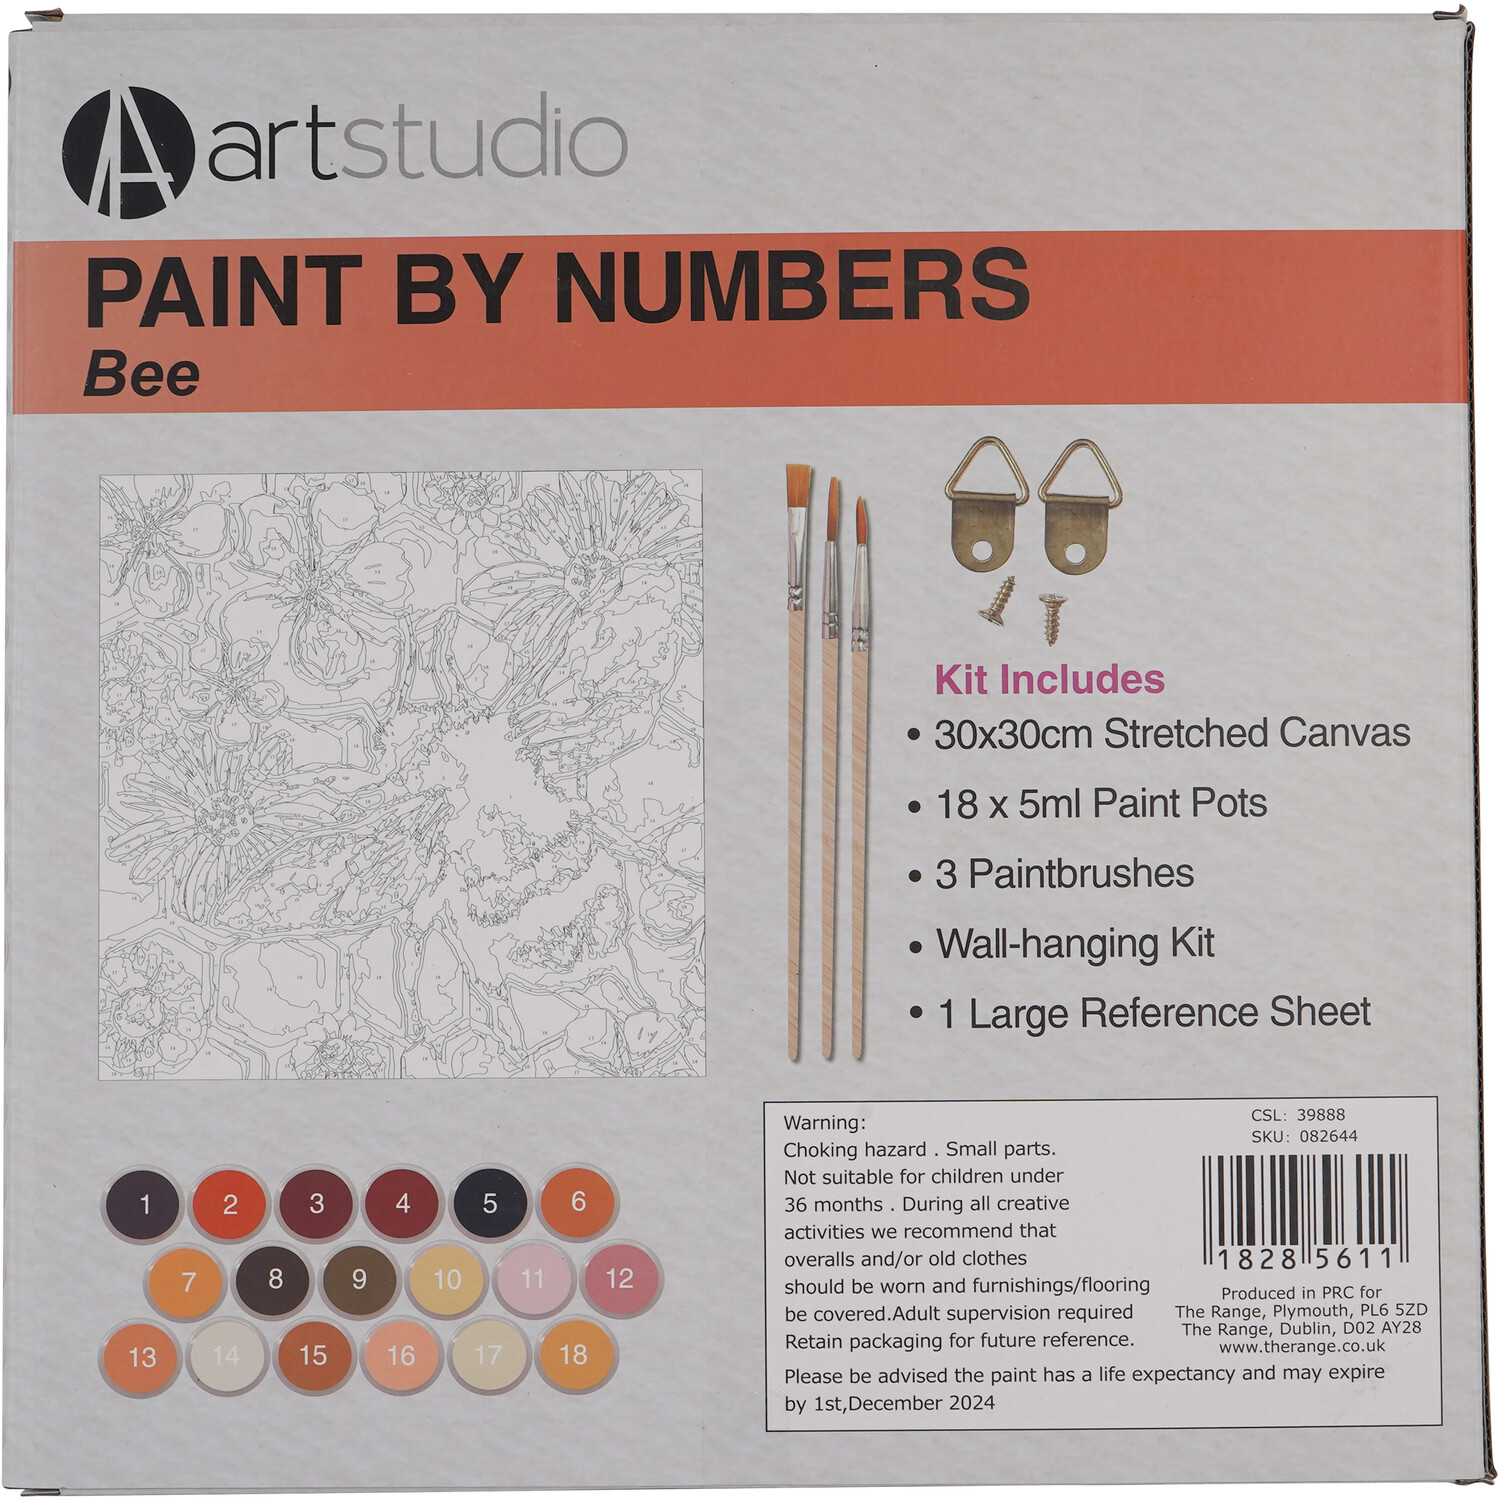 Art Studio Paint by Numbers - Bee Image 3